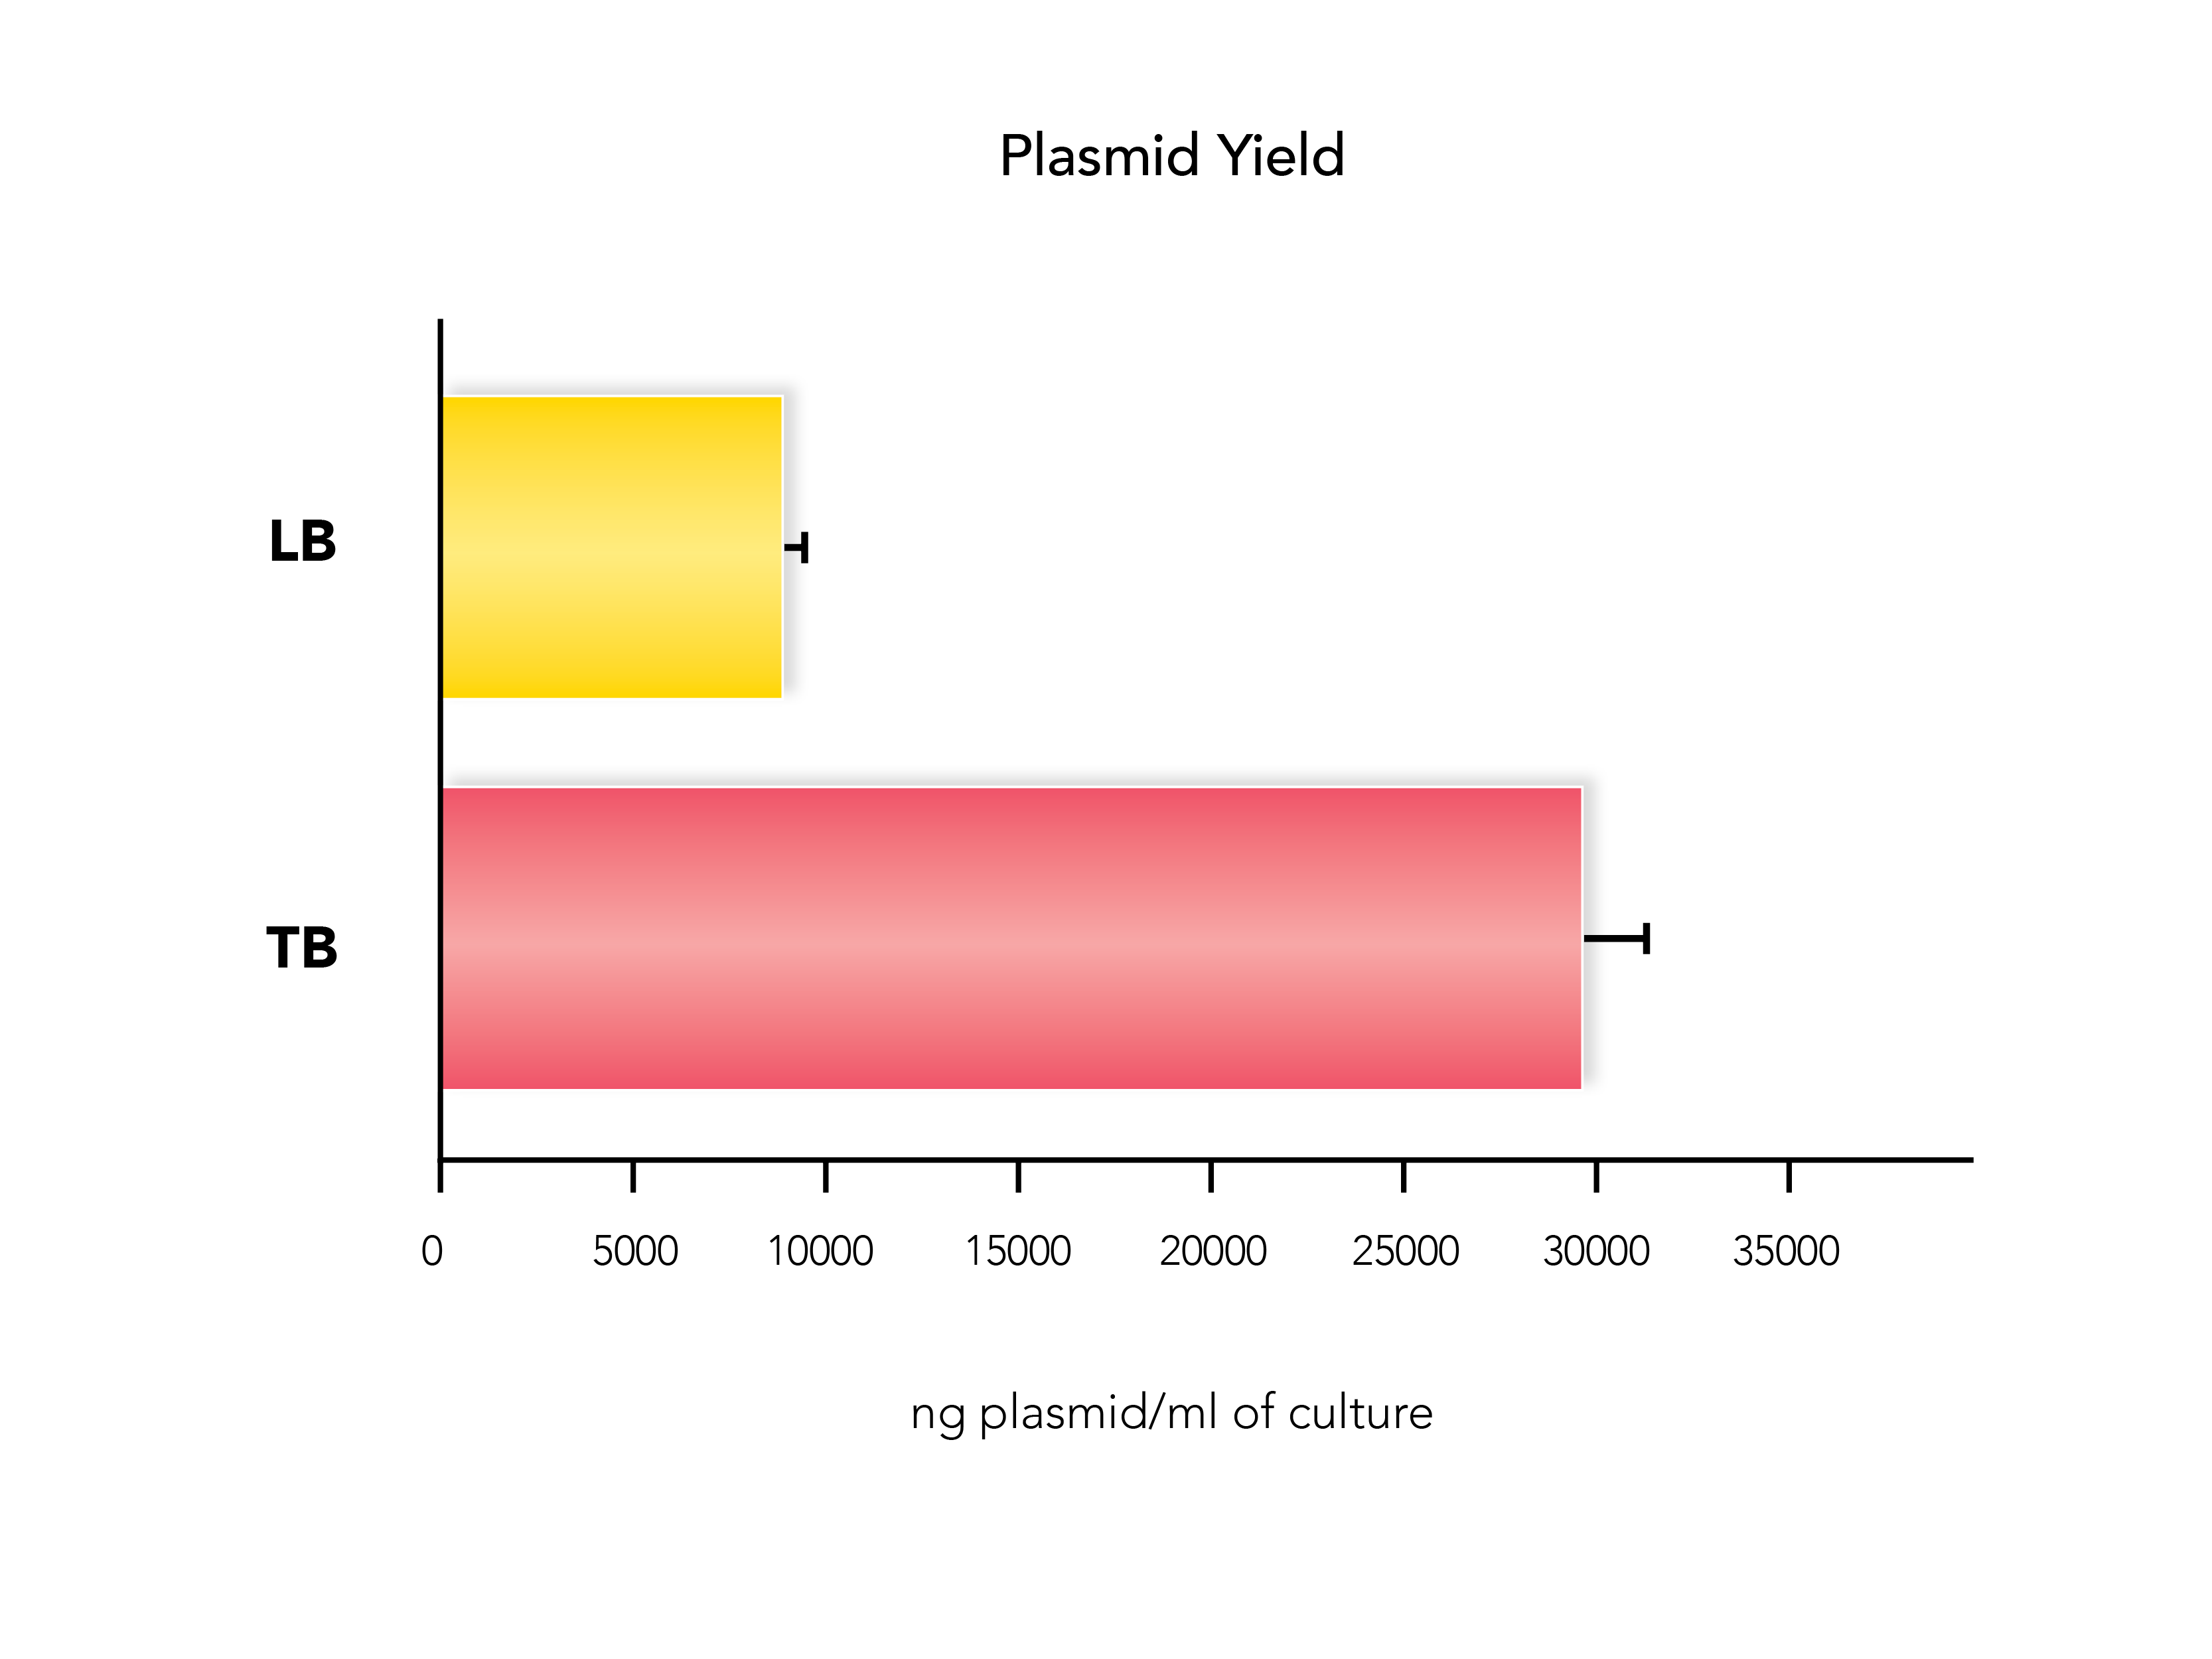 Plasmid yield graph